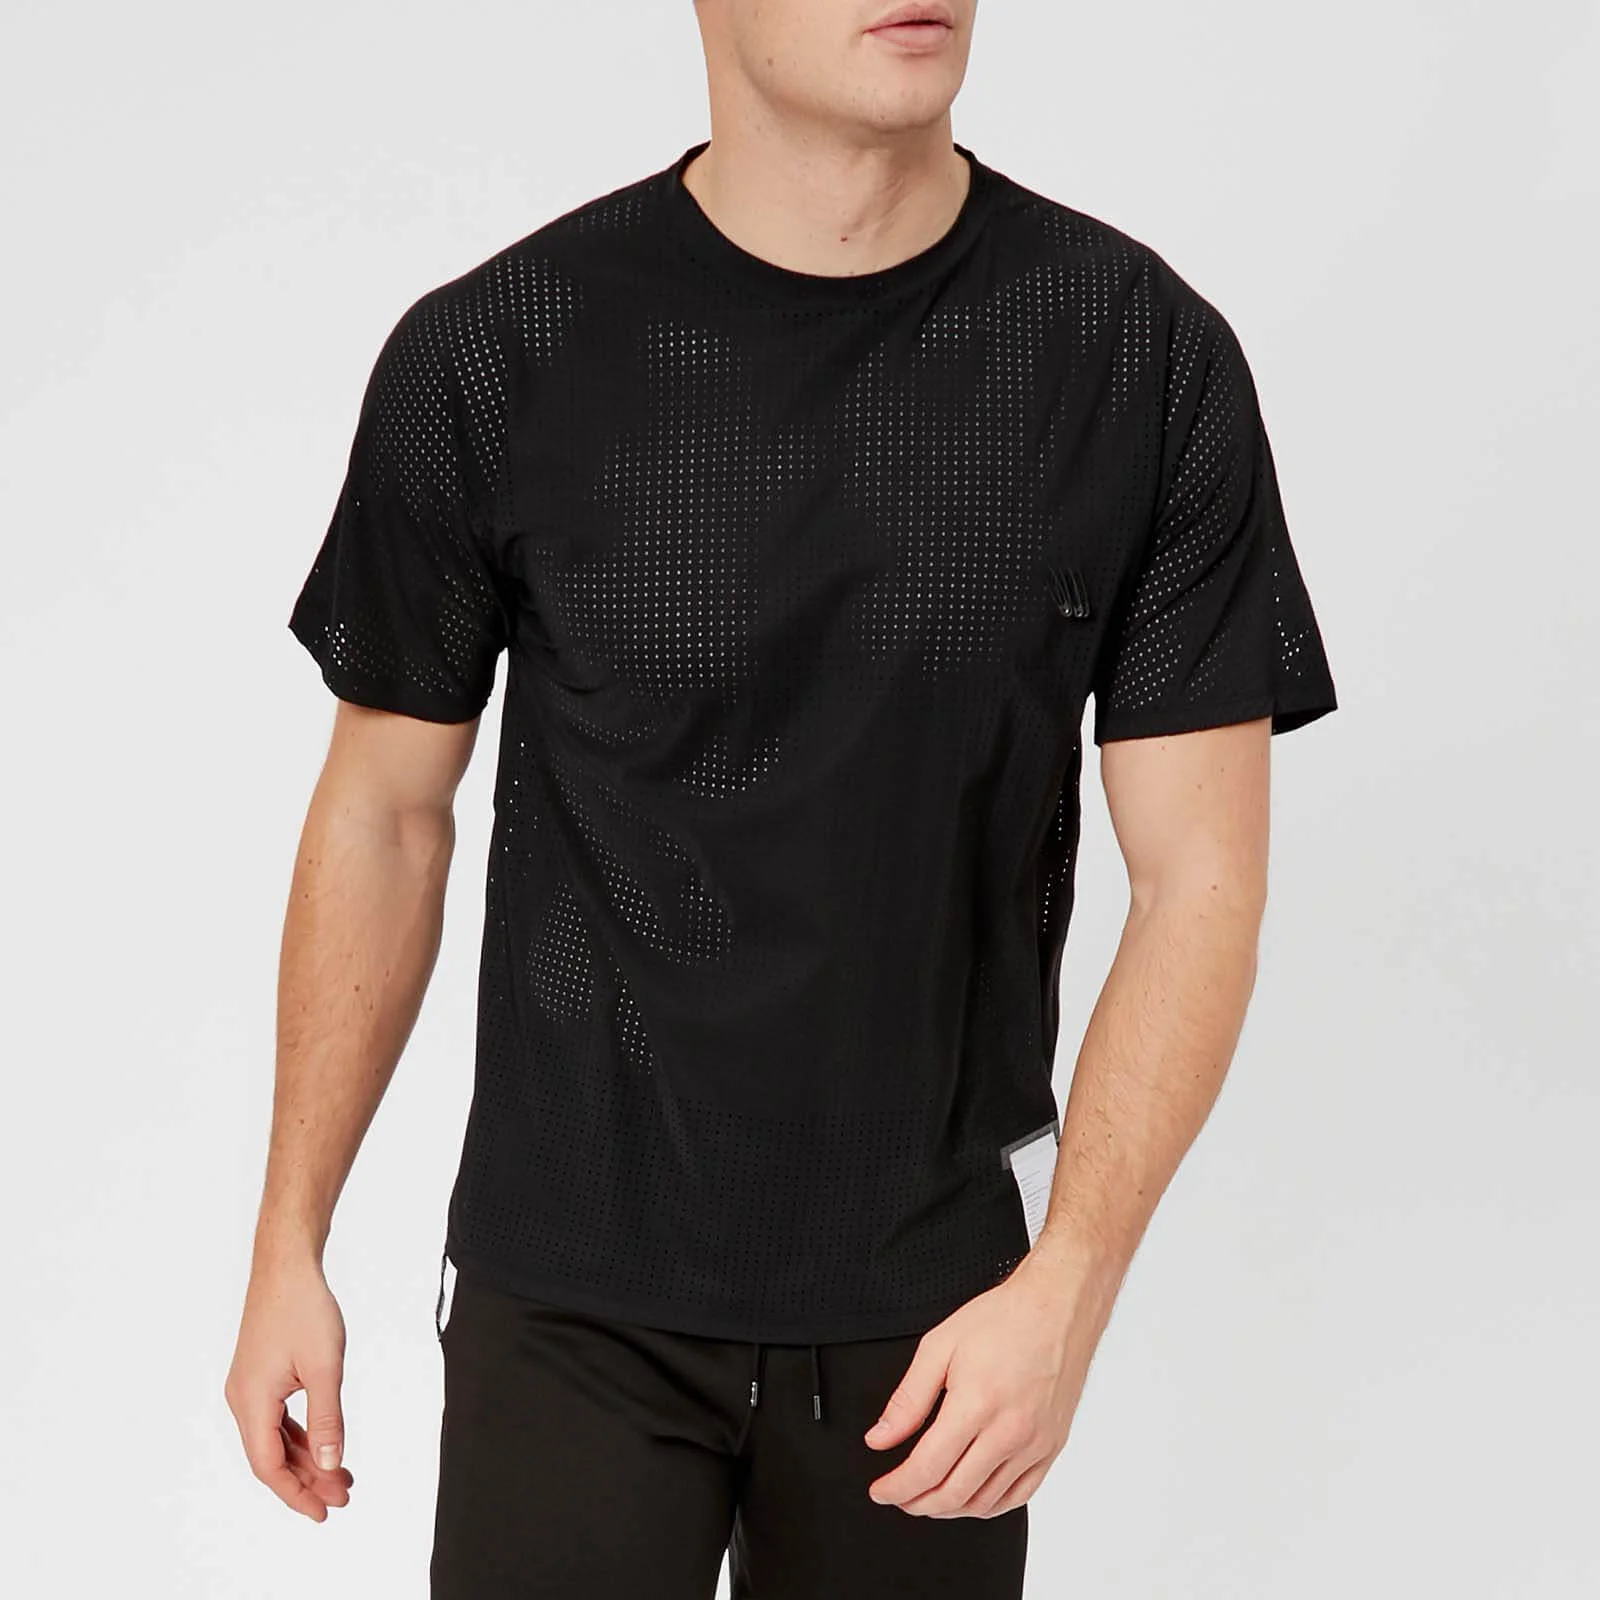 Satisfy Men's Punk Race Short Sleeve T-Shirt - Black Image 1